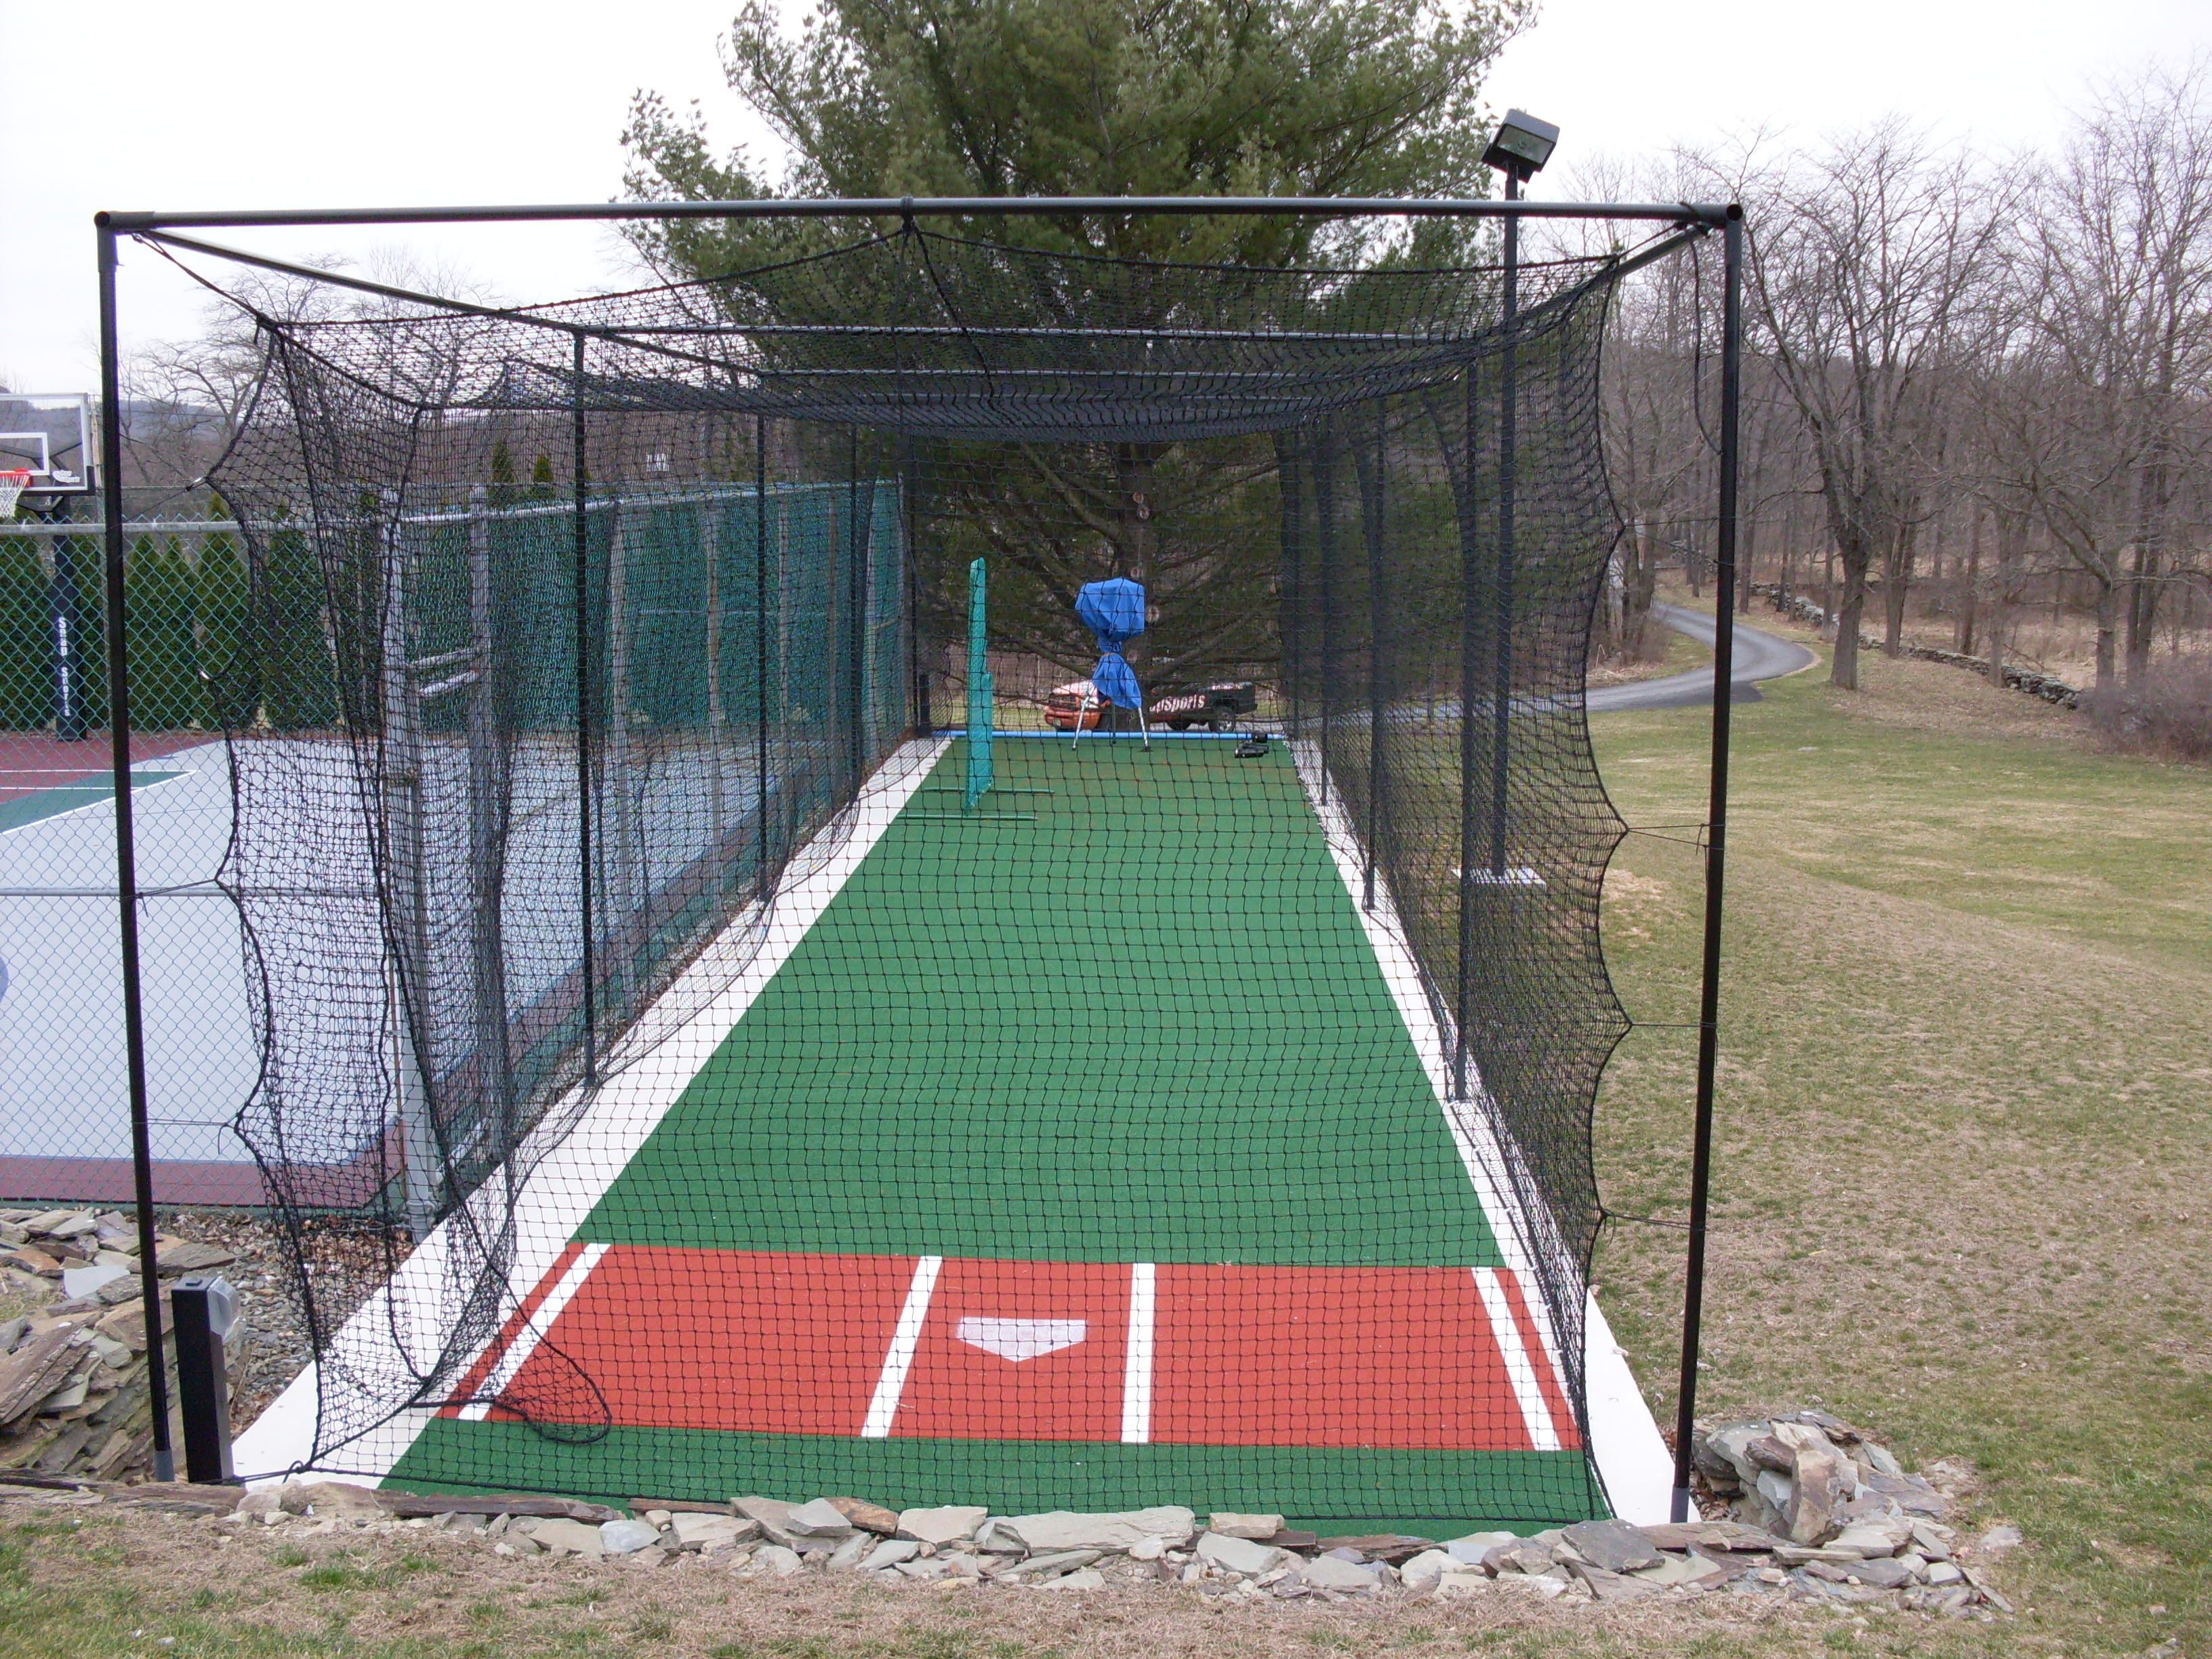 14.Residential batting cage sport pro usa baseball in 2019 via SIMPHOME.COM